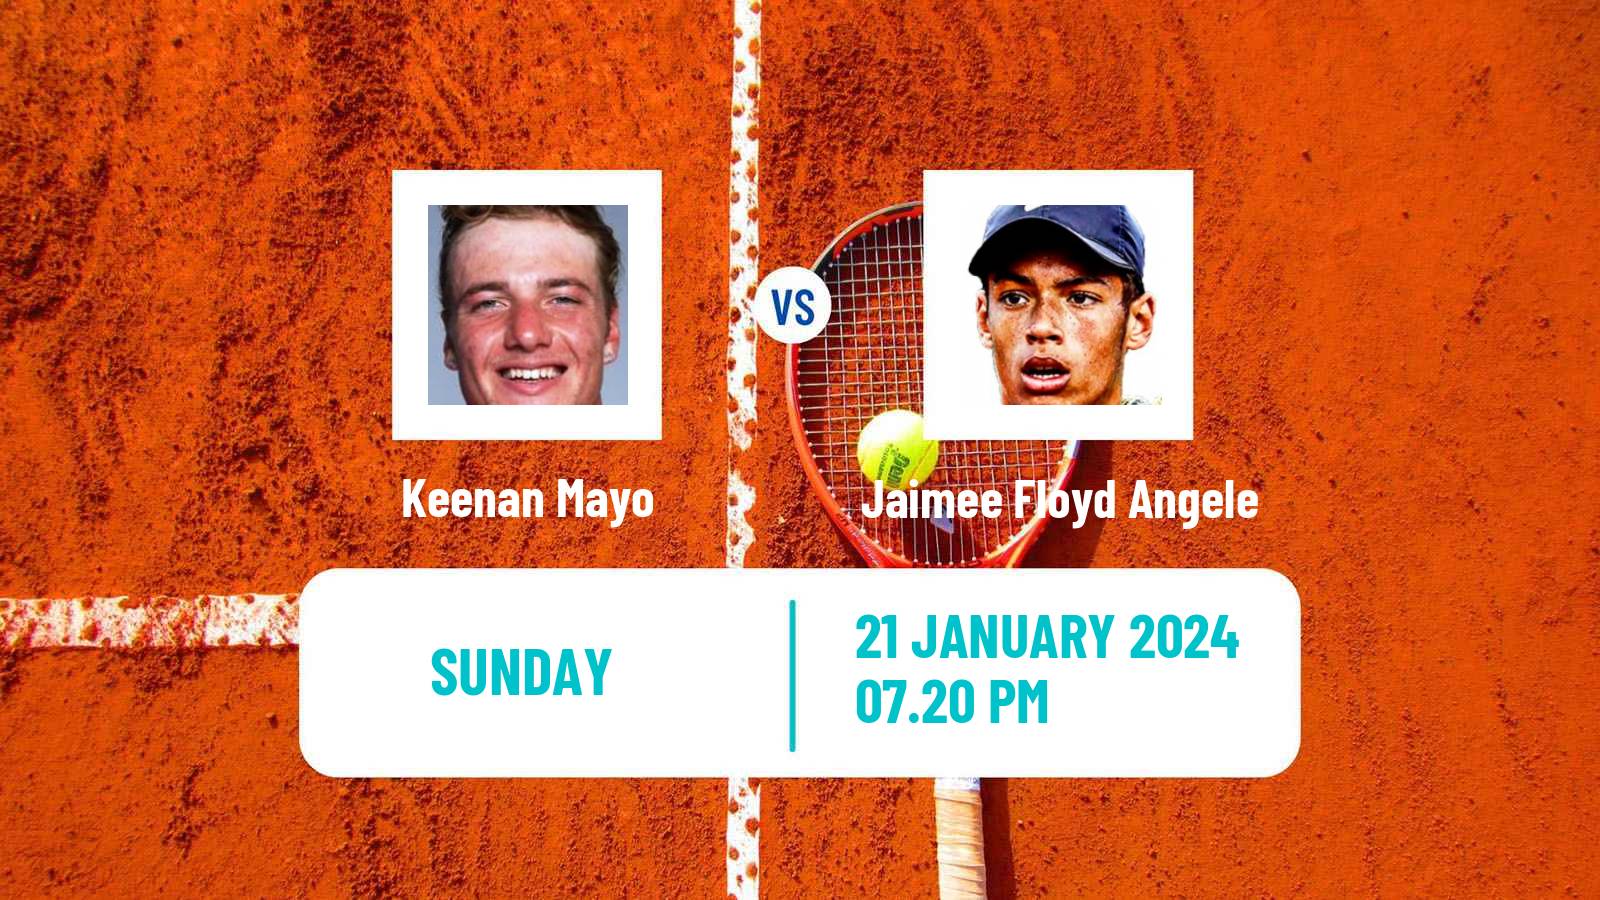 Tennis Indian Wells 2 Challenger Men Keenan Mayo - Jaimee Floyd Angele